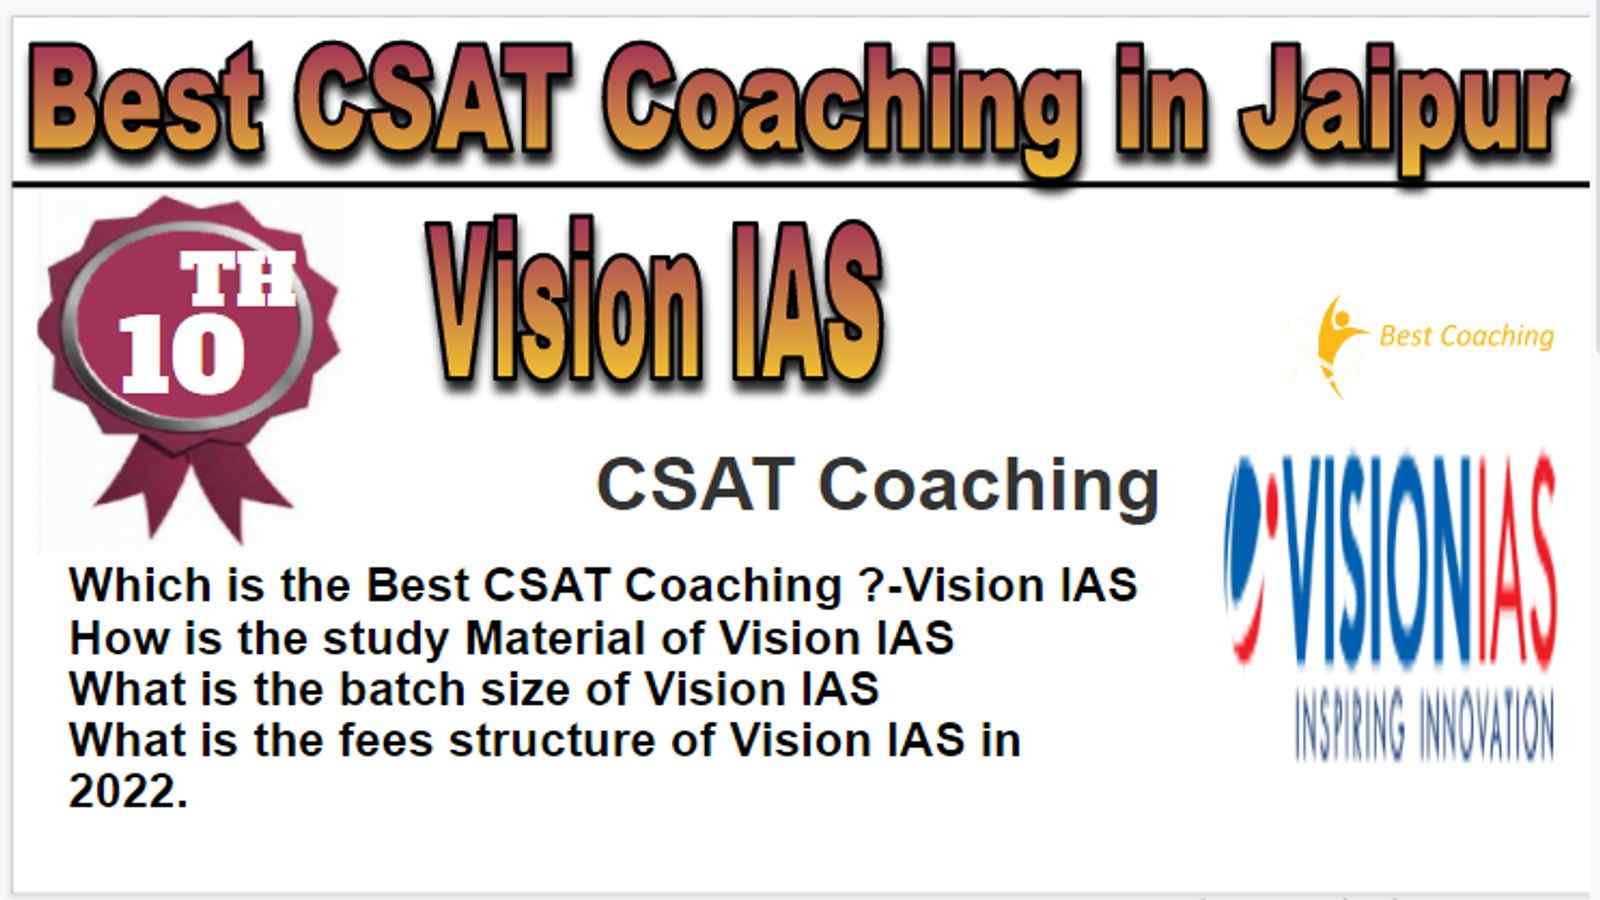 Rank 10 Best CSAT Coaching in Jaipur